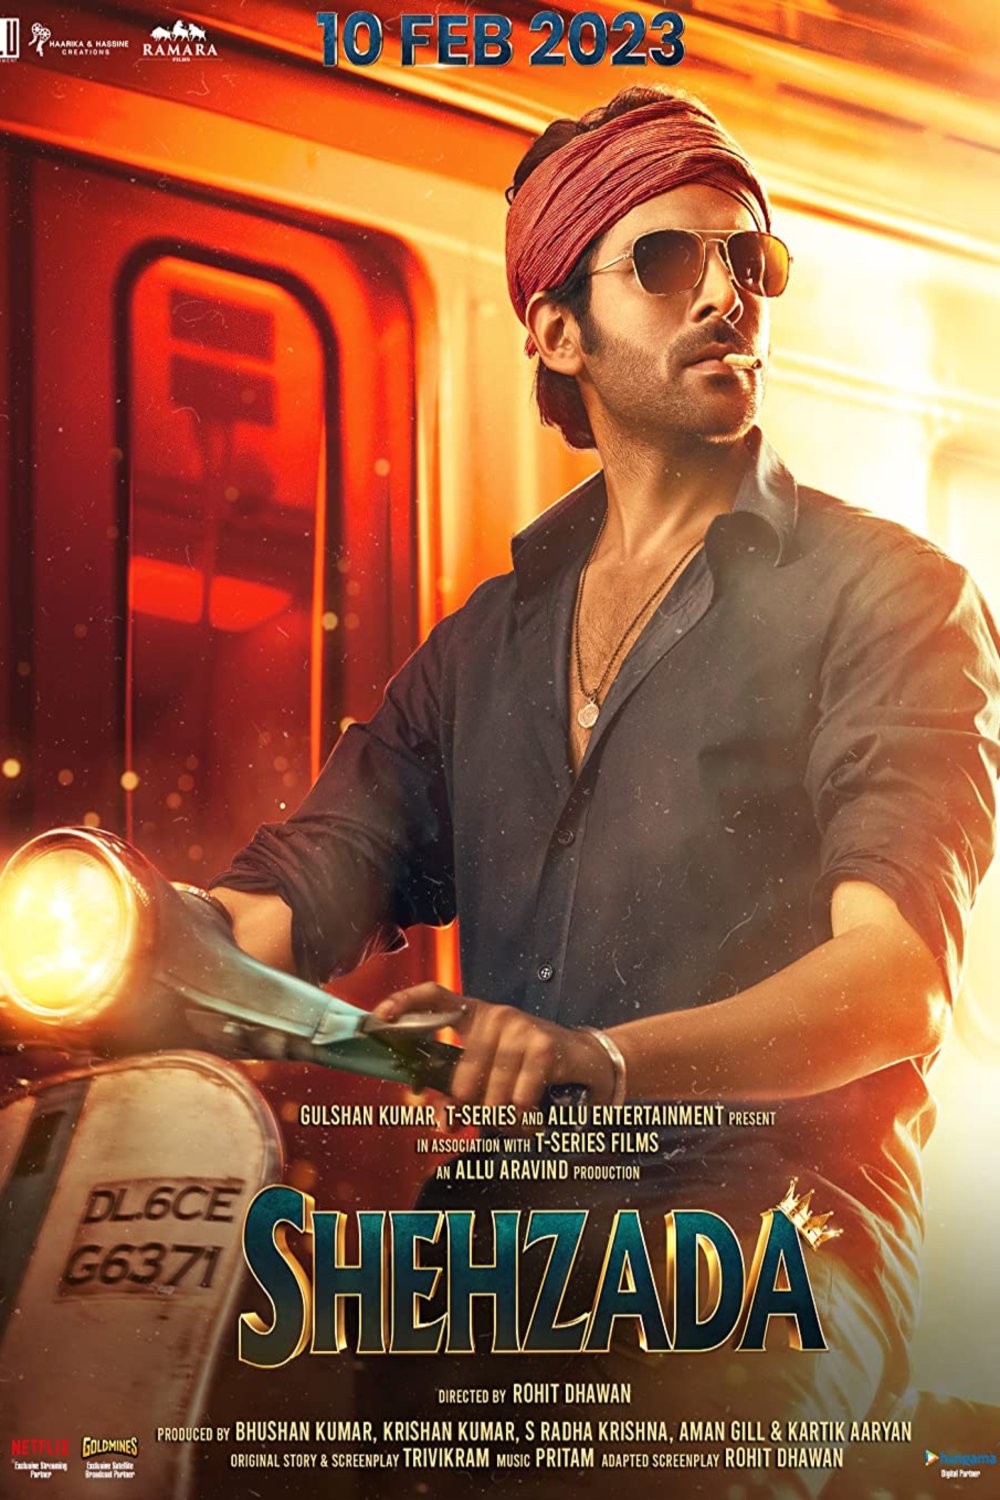 Hindi poster of the movie Shehzada